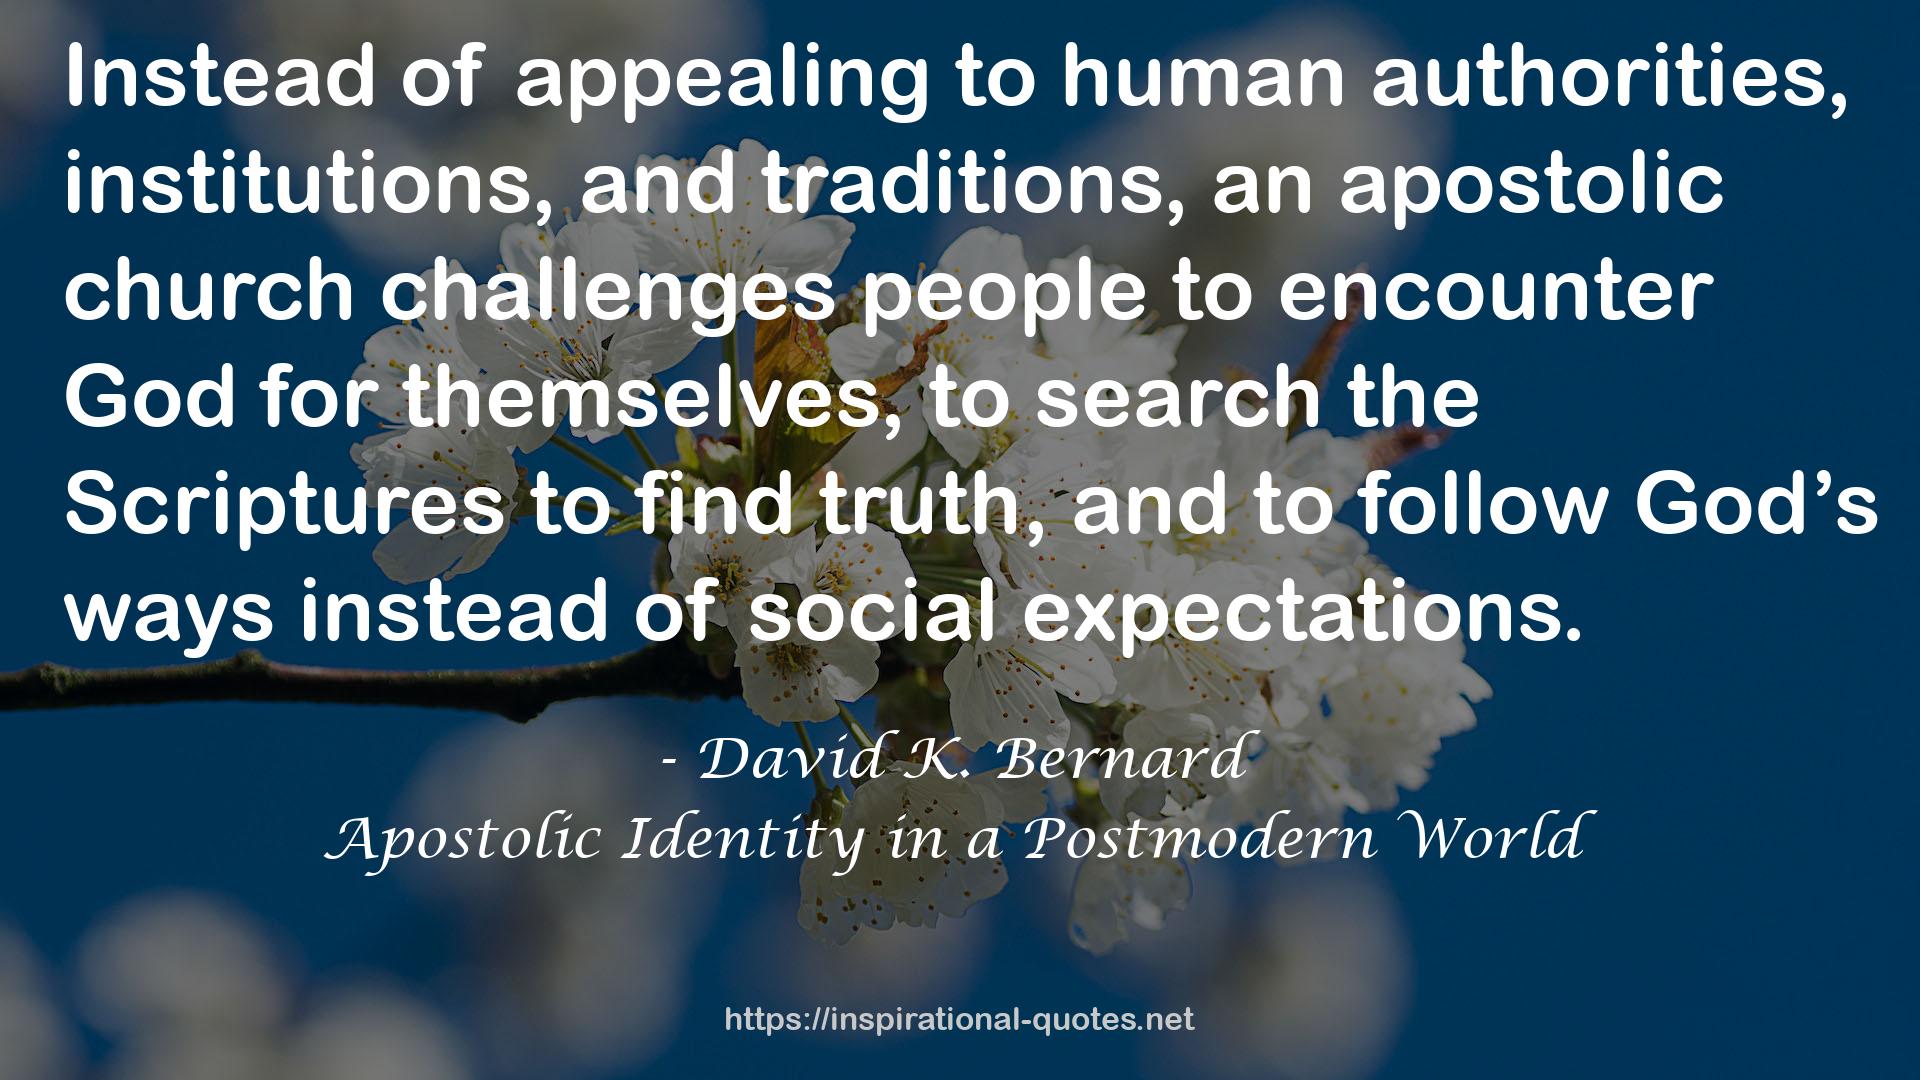 Apostolic Identity in a Postmodern World QUOTES